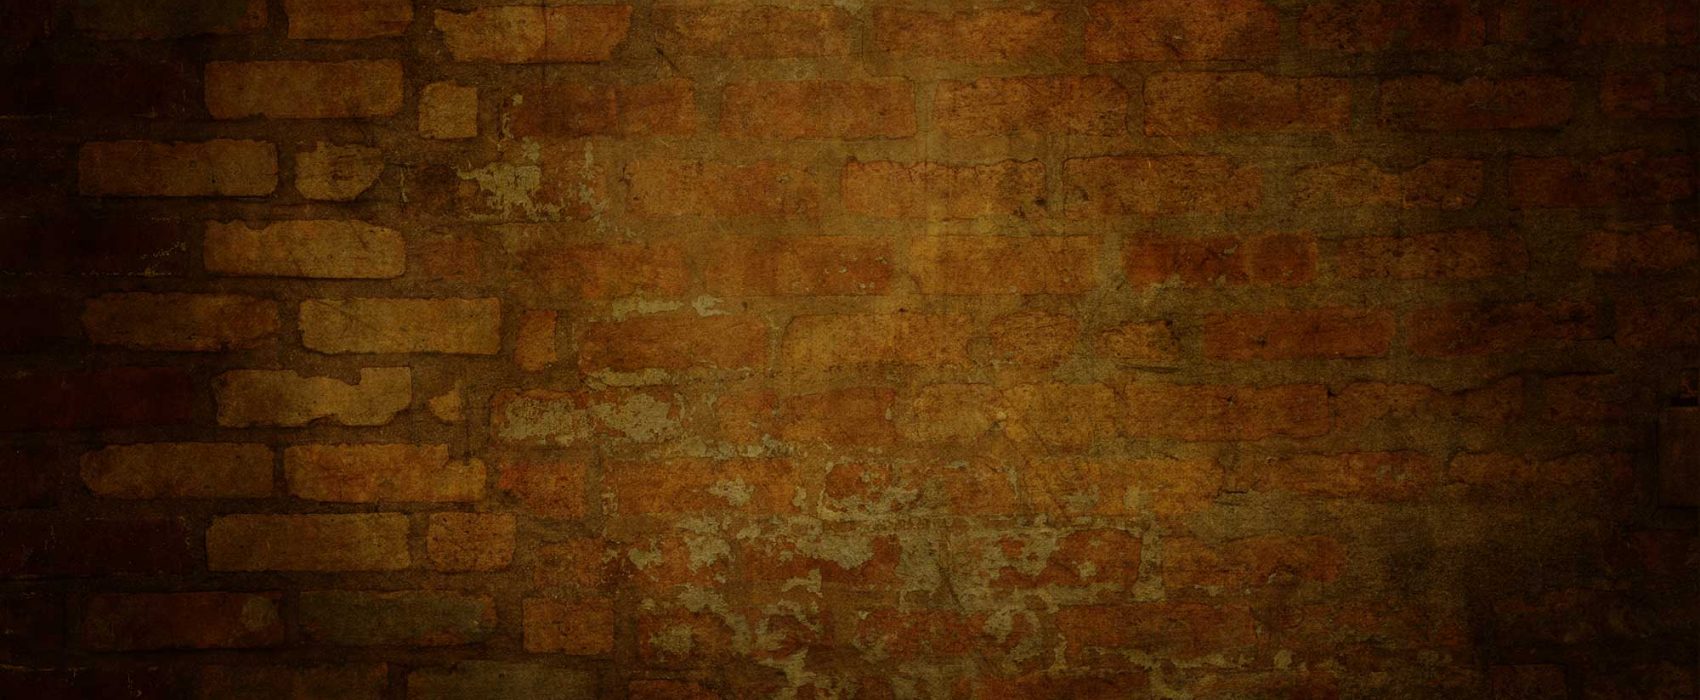 10 Grunge Brick Backgrounds